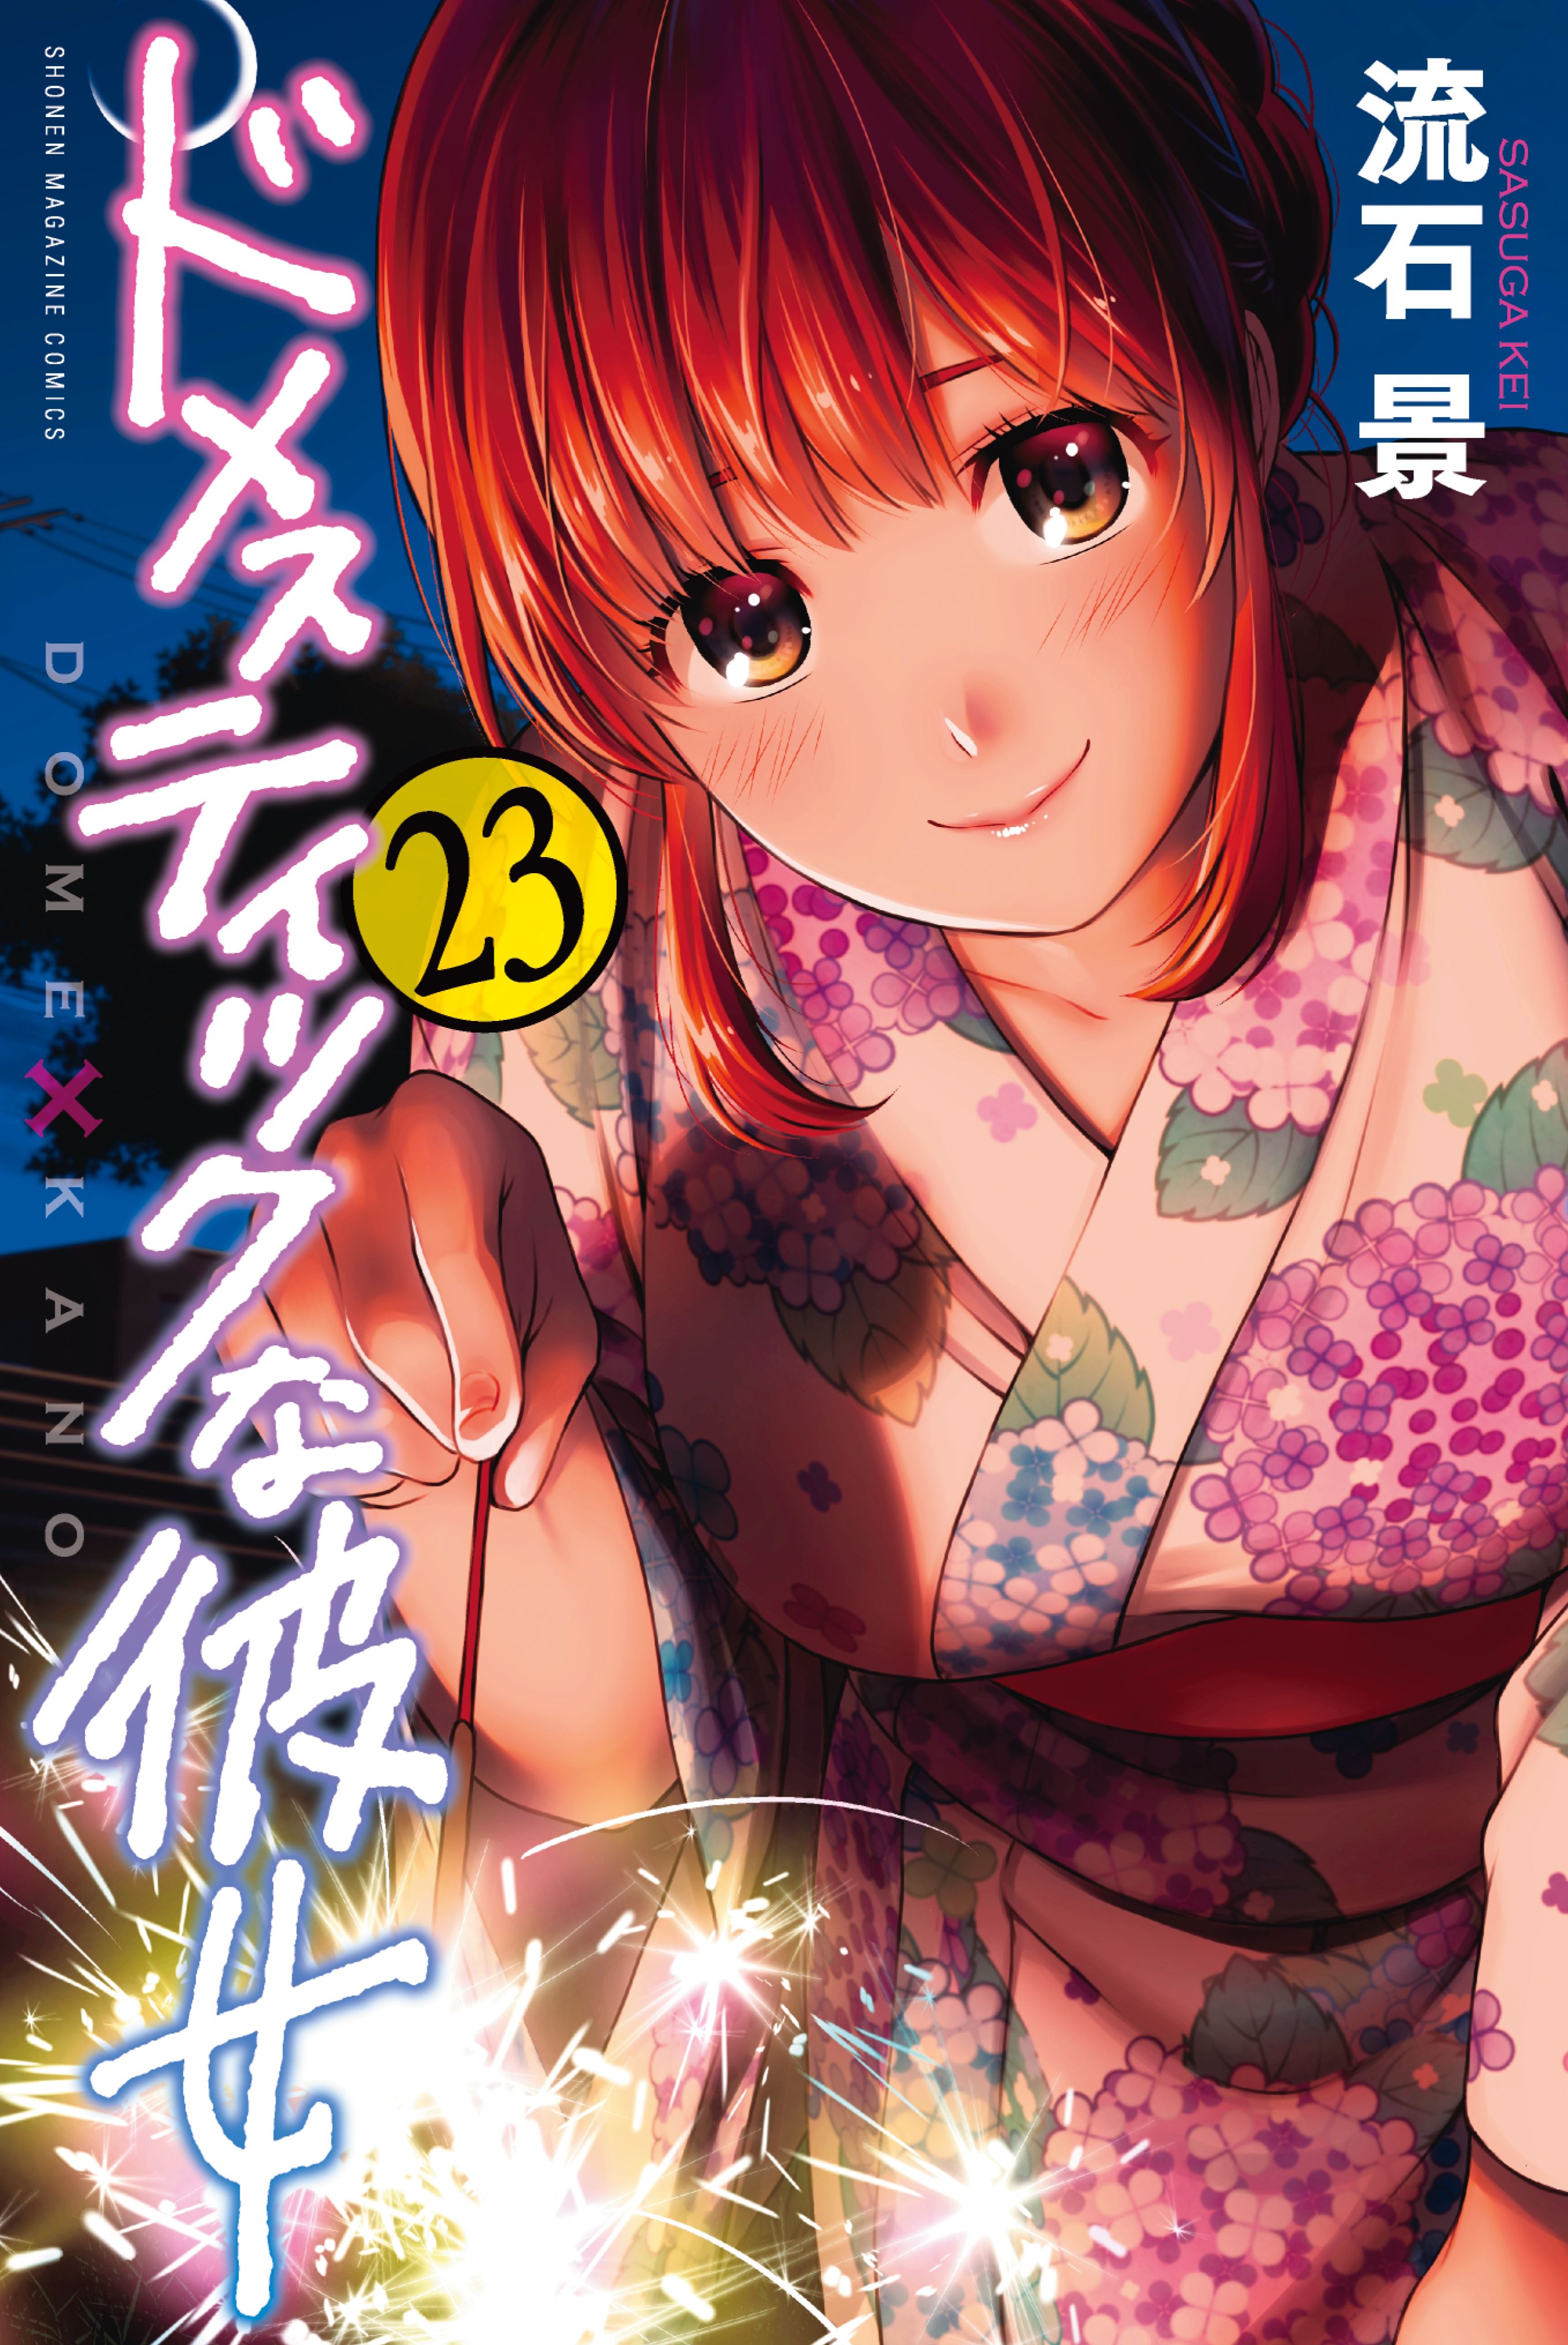 Domestic Girlfriend Volume 11 (Domestic na Kanojo) - Manga Store 